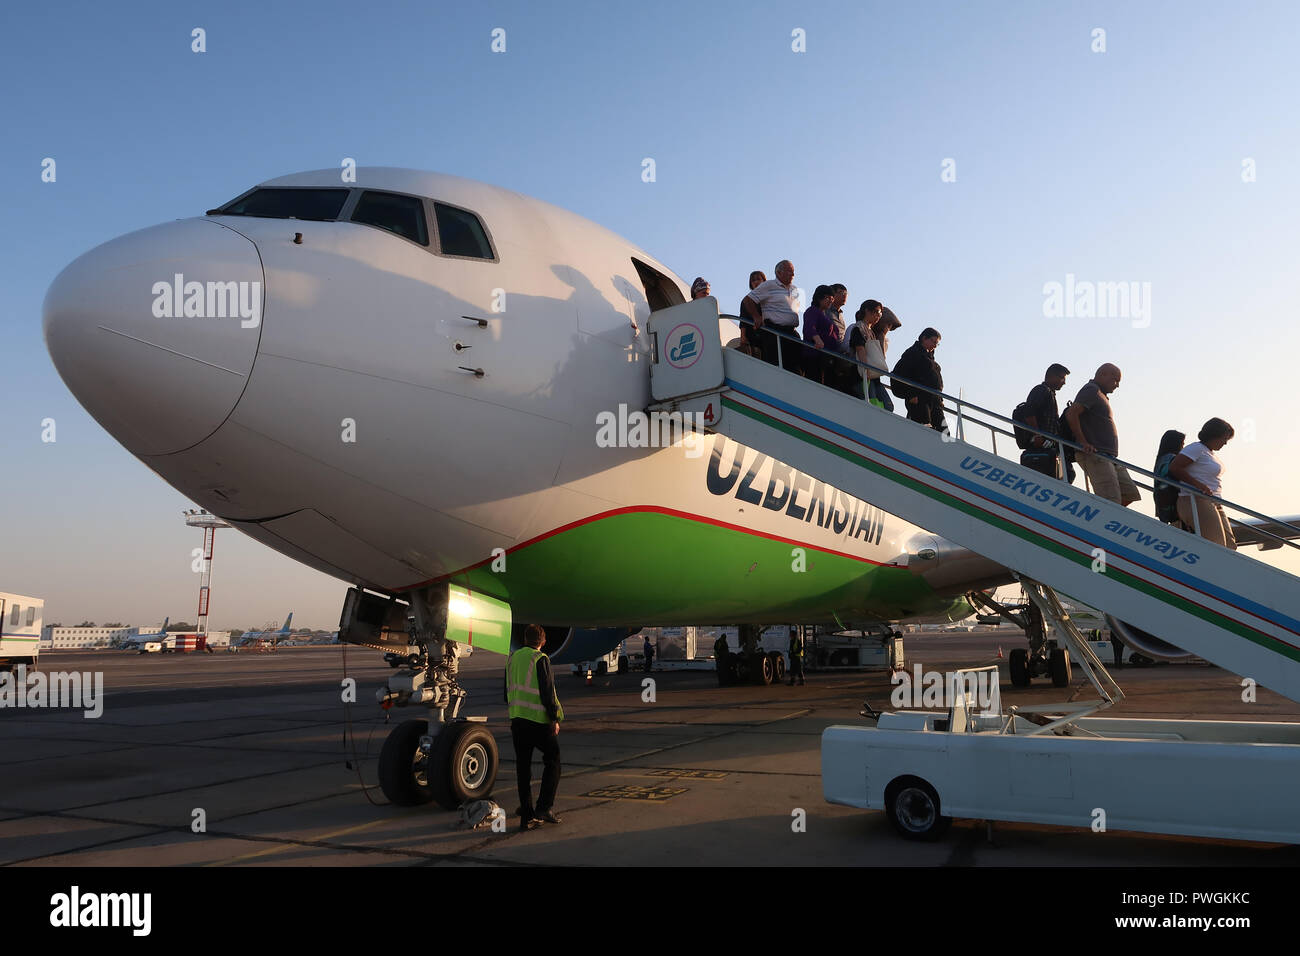 Passengers disembark from an airplane of National Air Company Uzbekistan Airways at Tashkent Yuzhny International Airport Uzbekistan Stock Photo